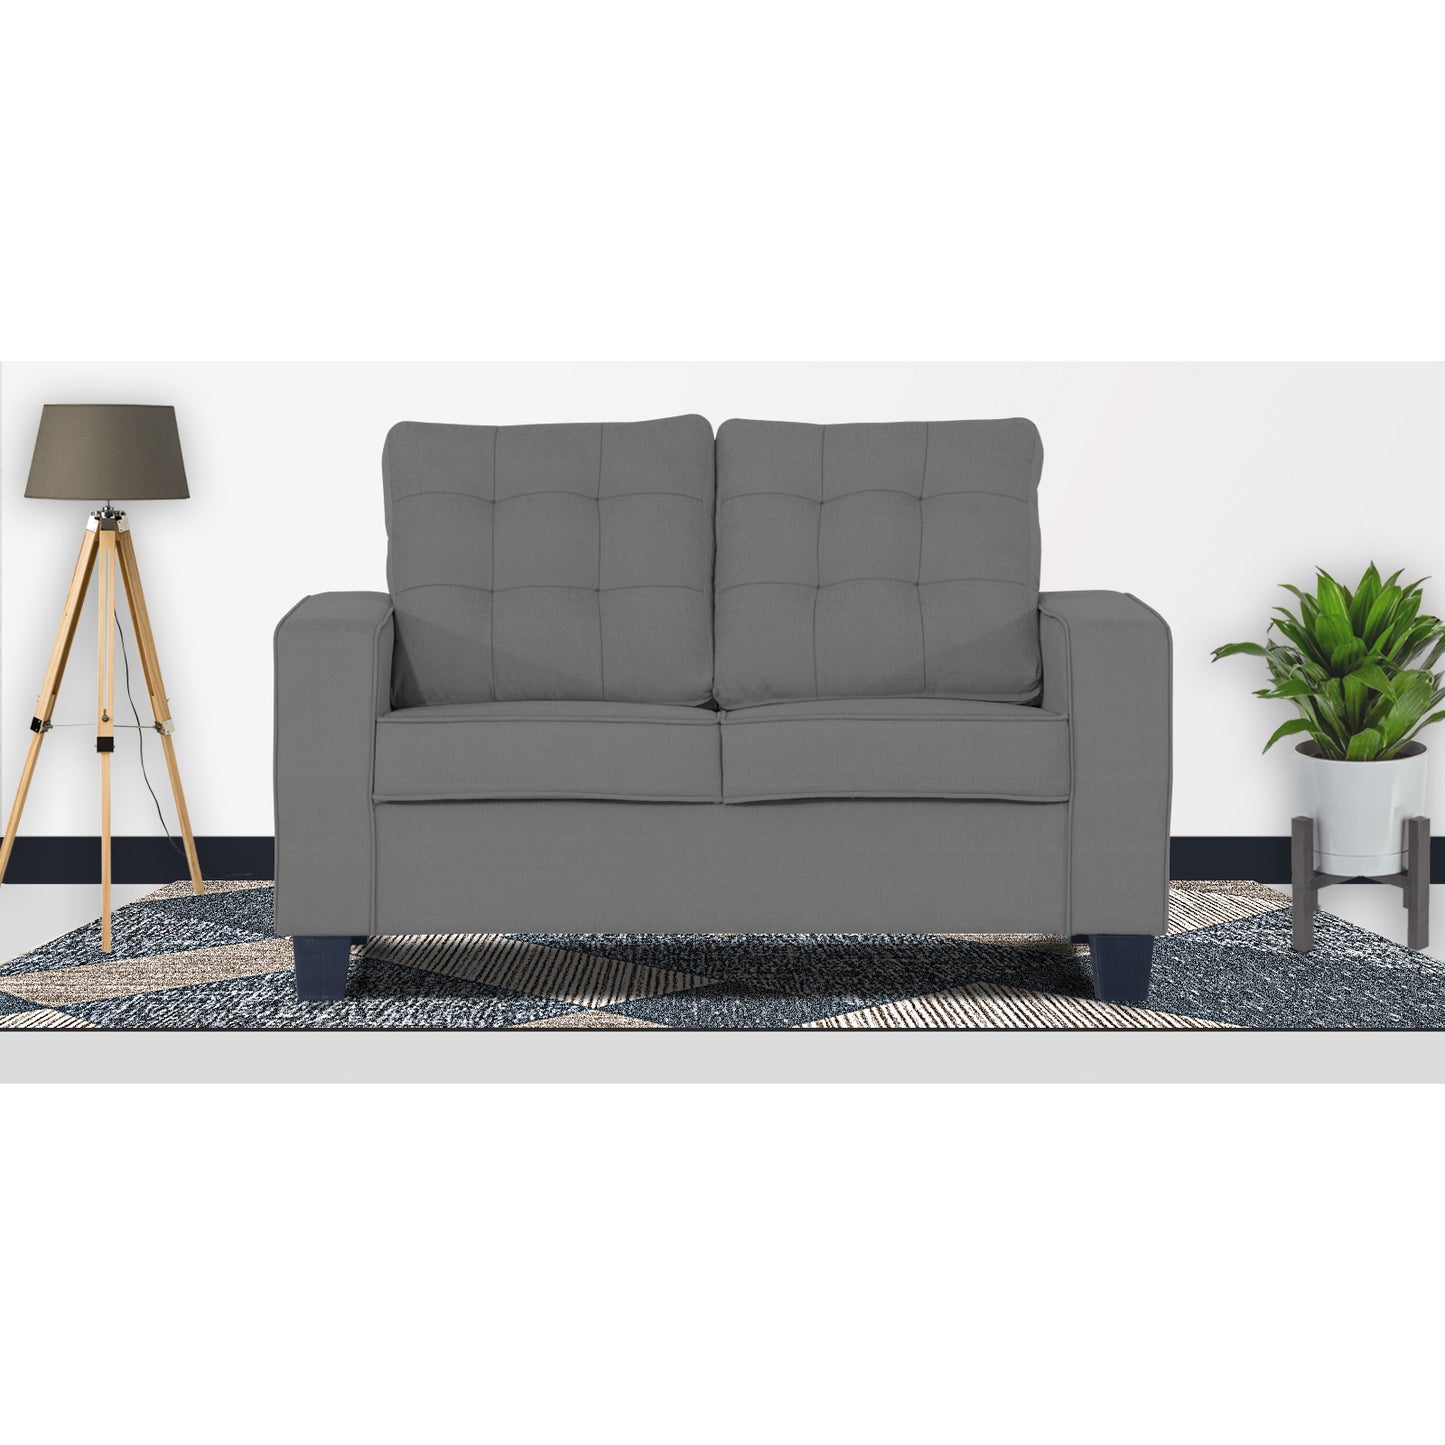 Adorn India Raptor 2 Seater Sofa (Grey)